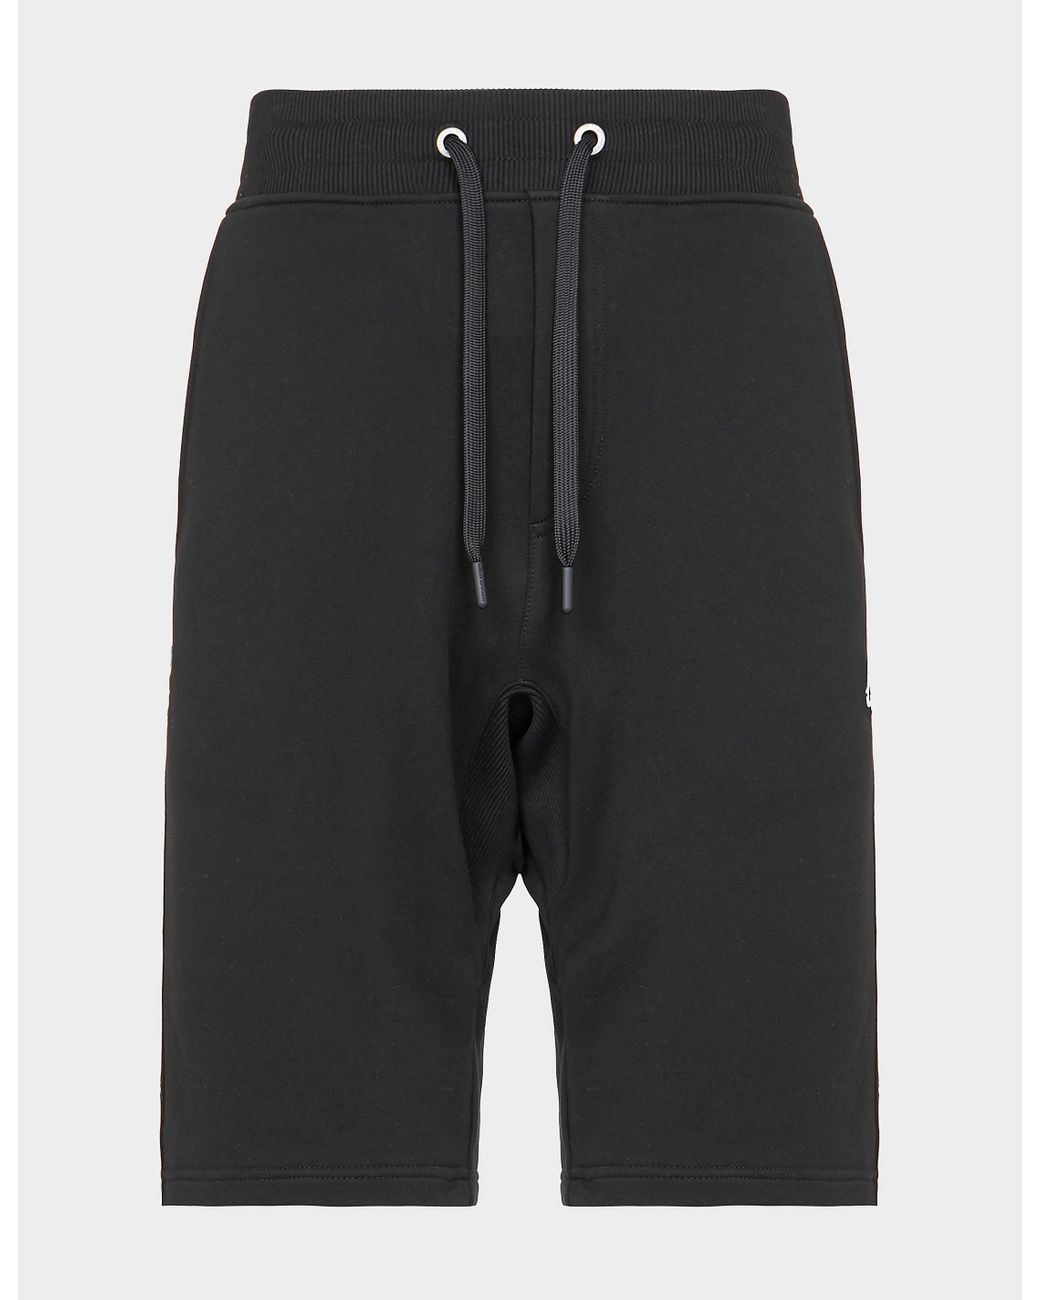 Moose Knuckles Fleece Lightyears Basic Shorts in Black for Men - Lyst